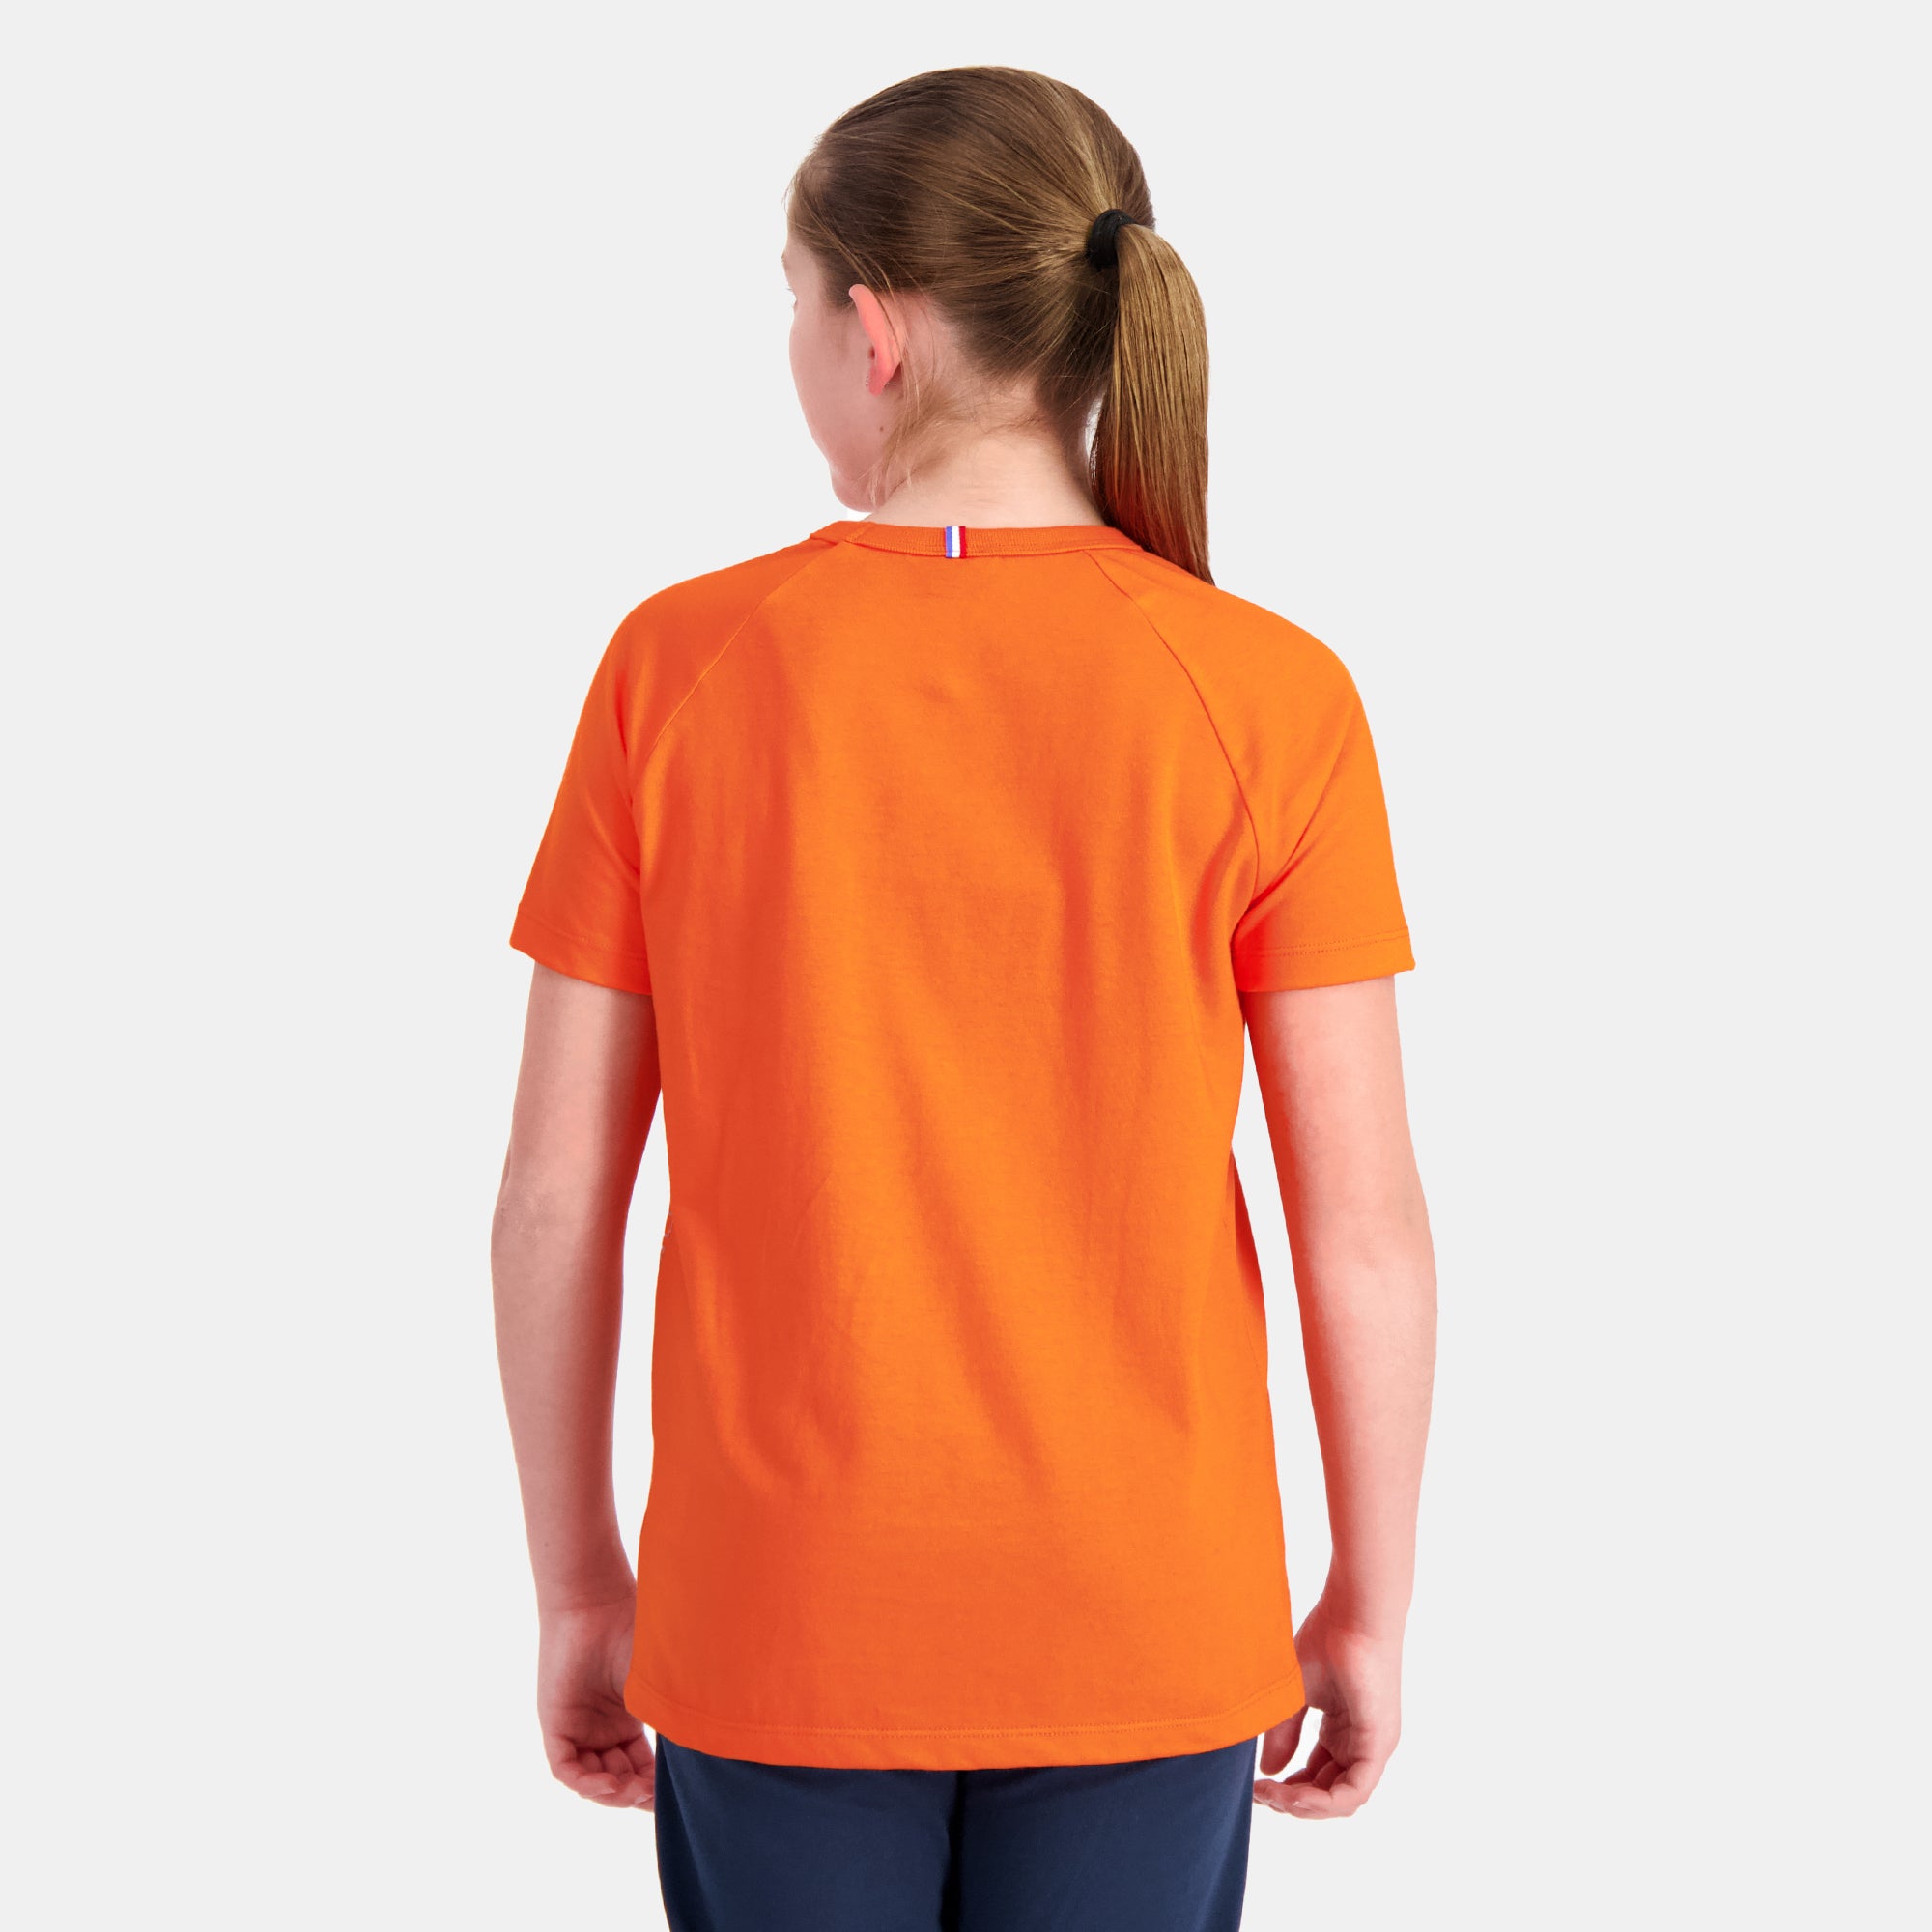 2410127-SAISON 2 Tee SS N°1 Enfant scarlet ibis  | T-Shirt for kids